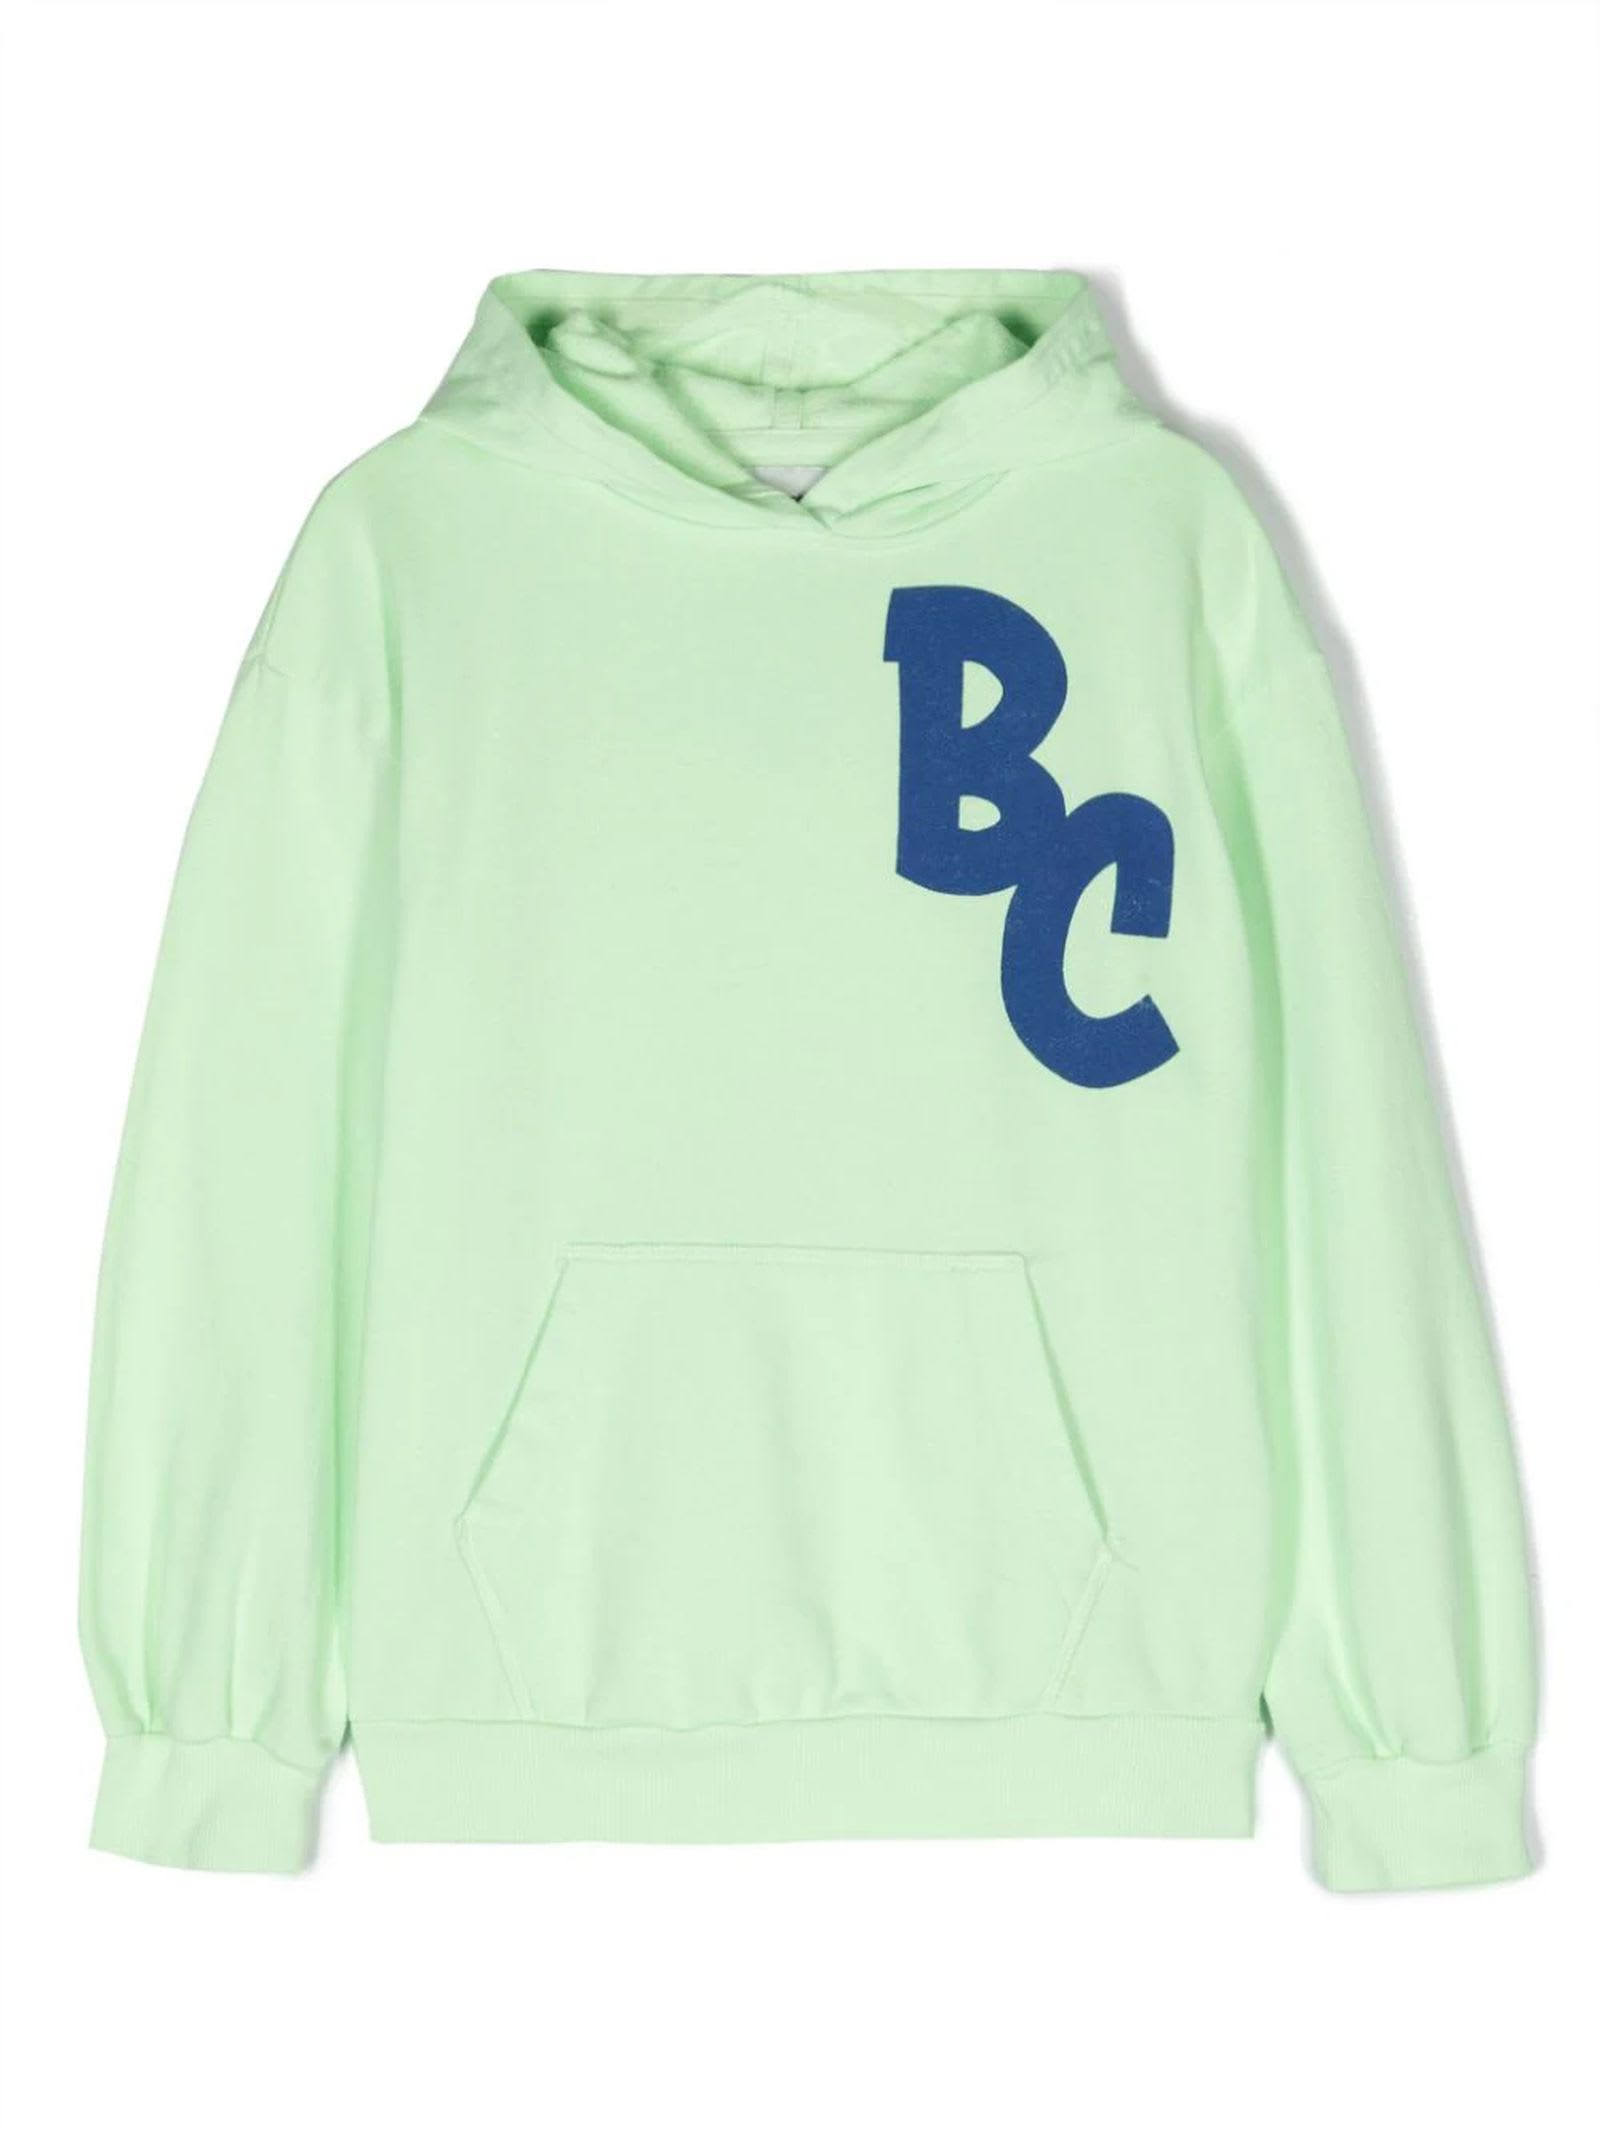 Shop Bobo Choses Sweaters Green